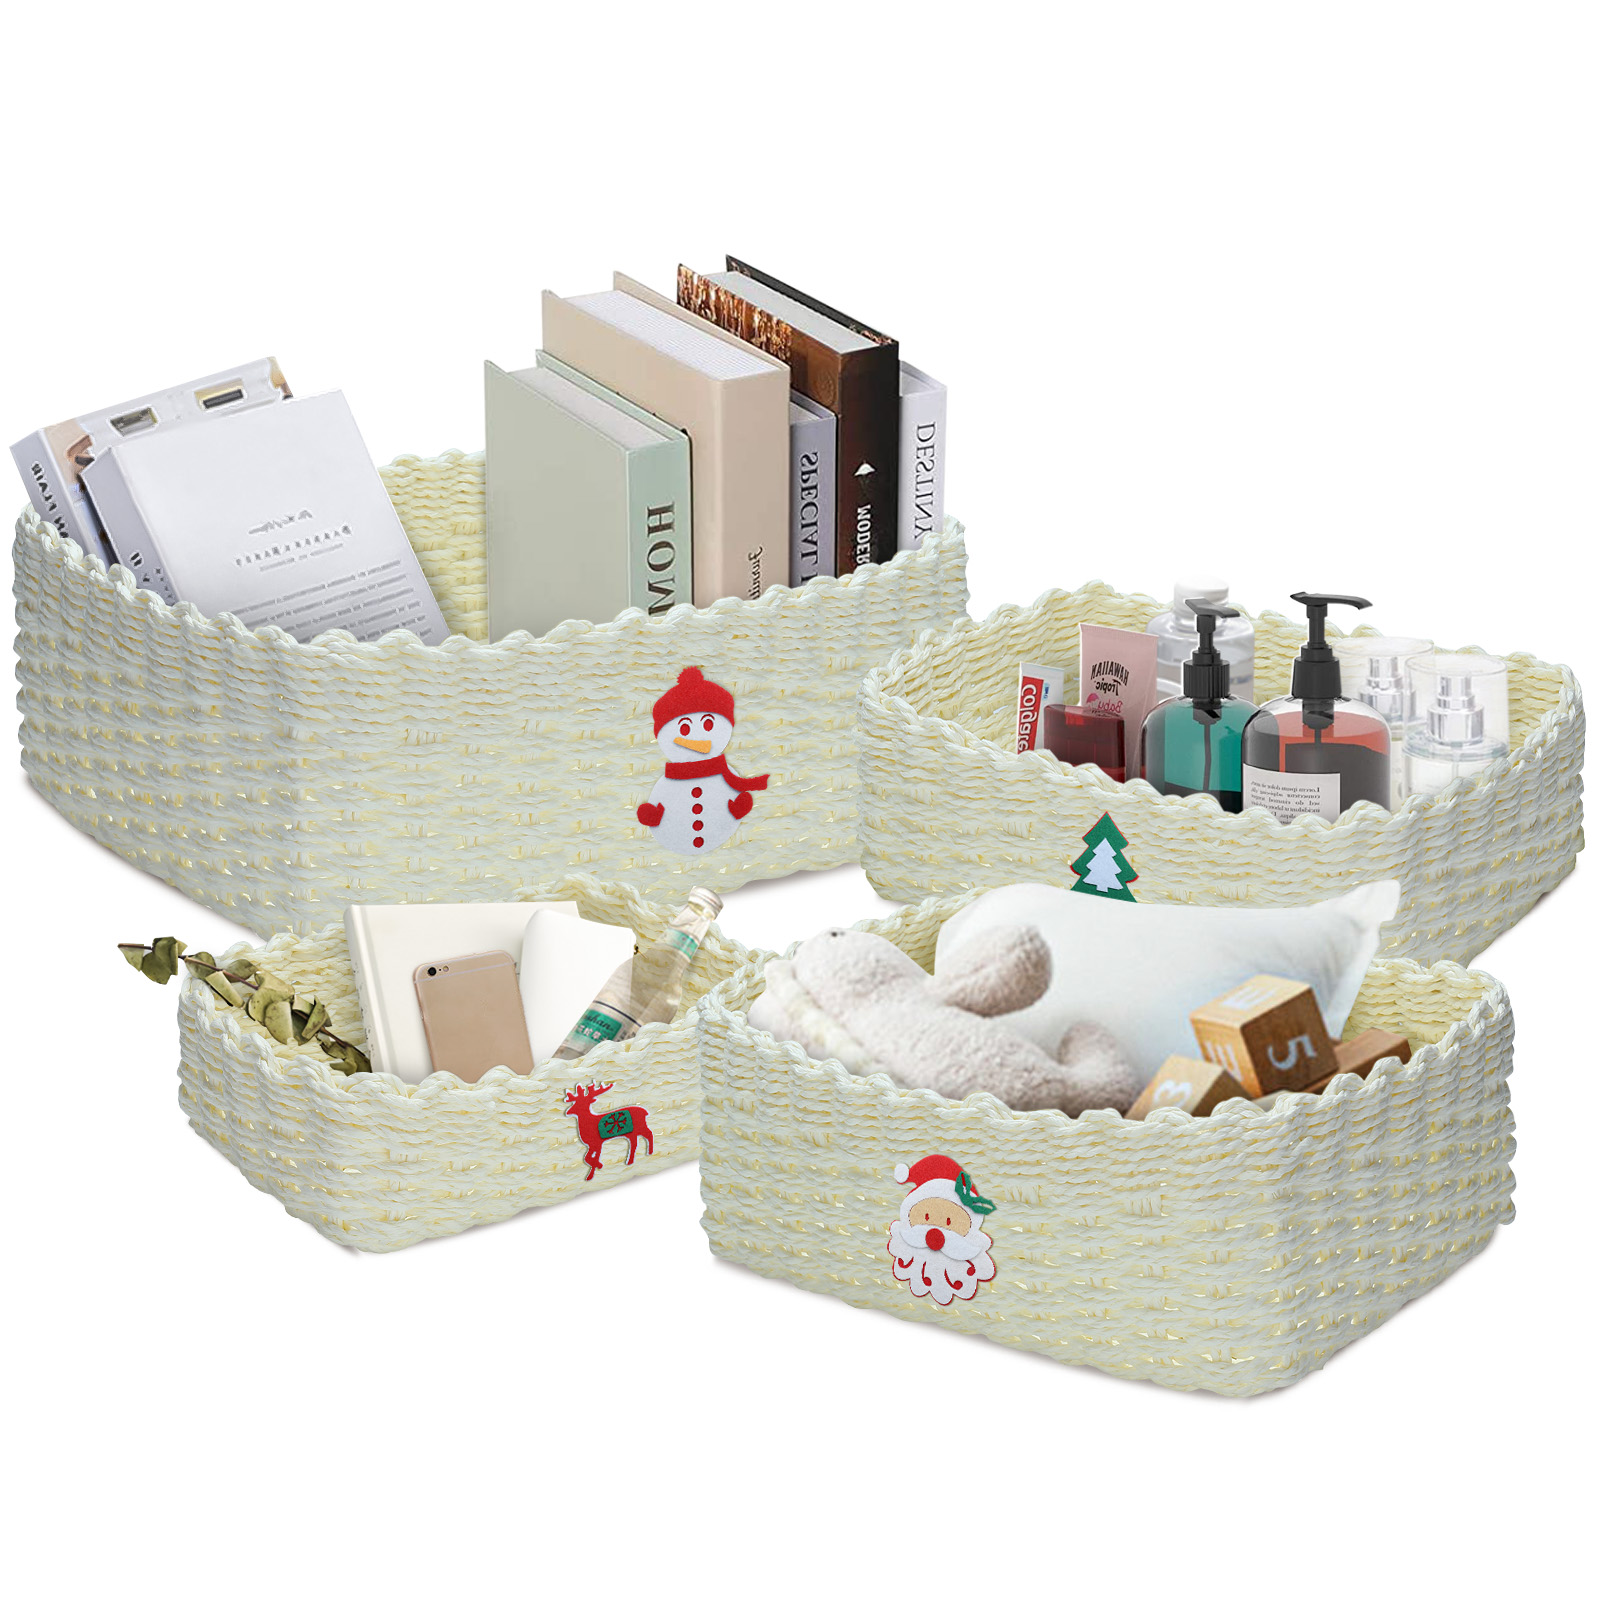 KING-DO-WAY-4PCS-Christmas-Handmade-Woven-Storage-Basket-Set-Durable-Eco-friendly-Storage-Basket-1891489-17